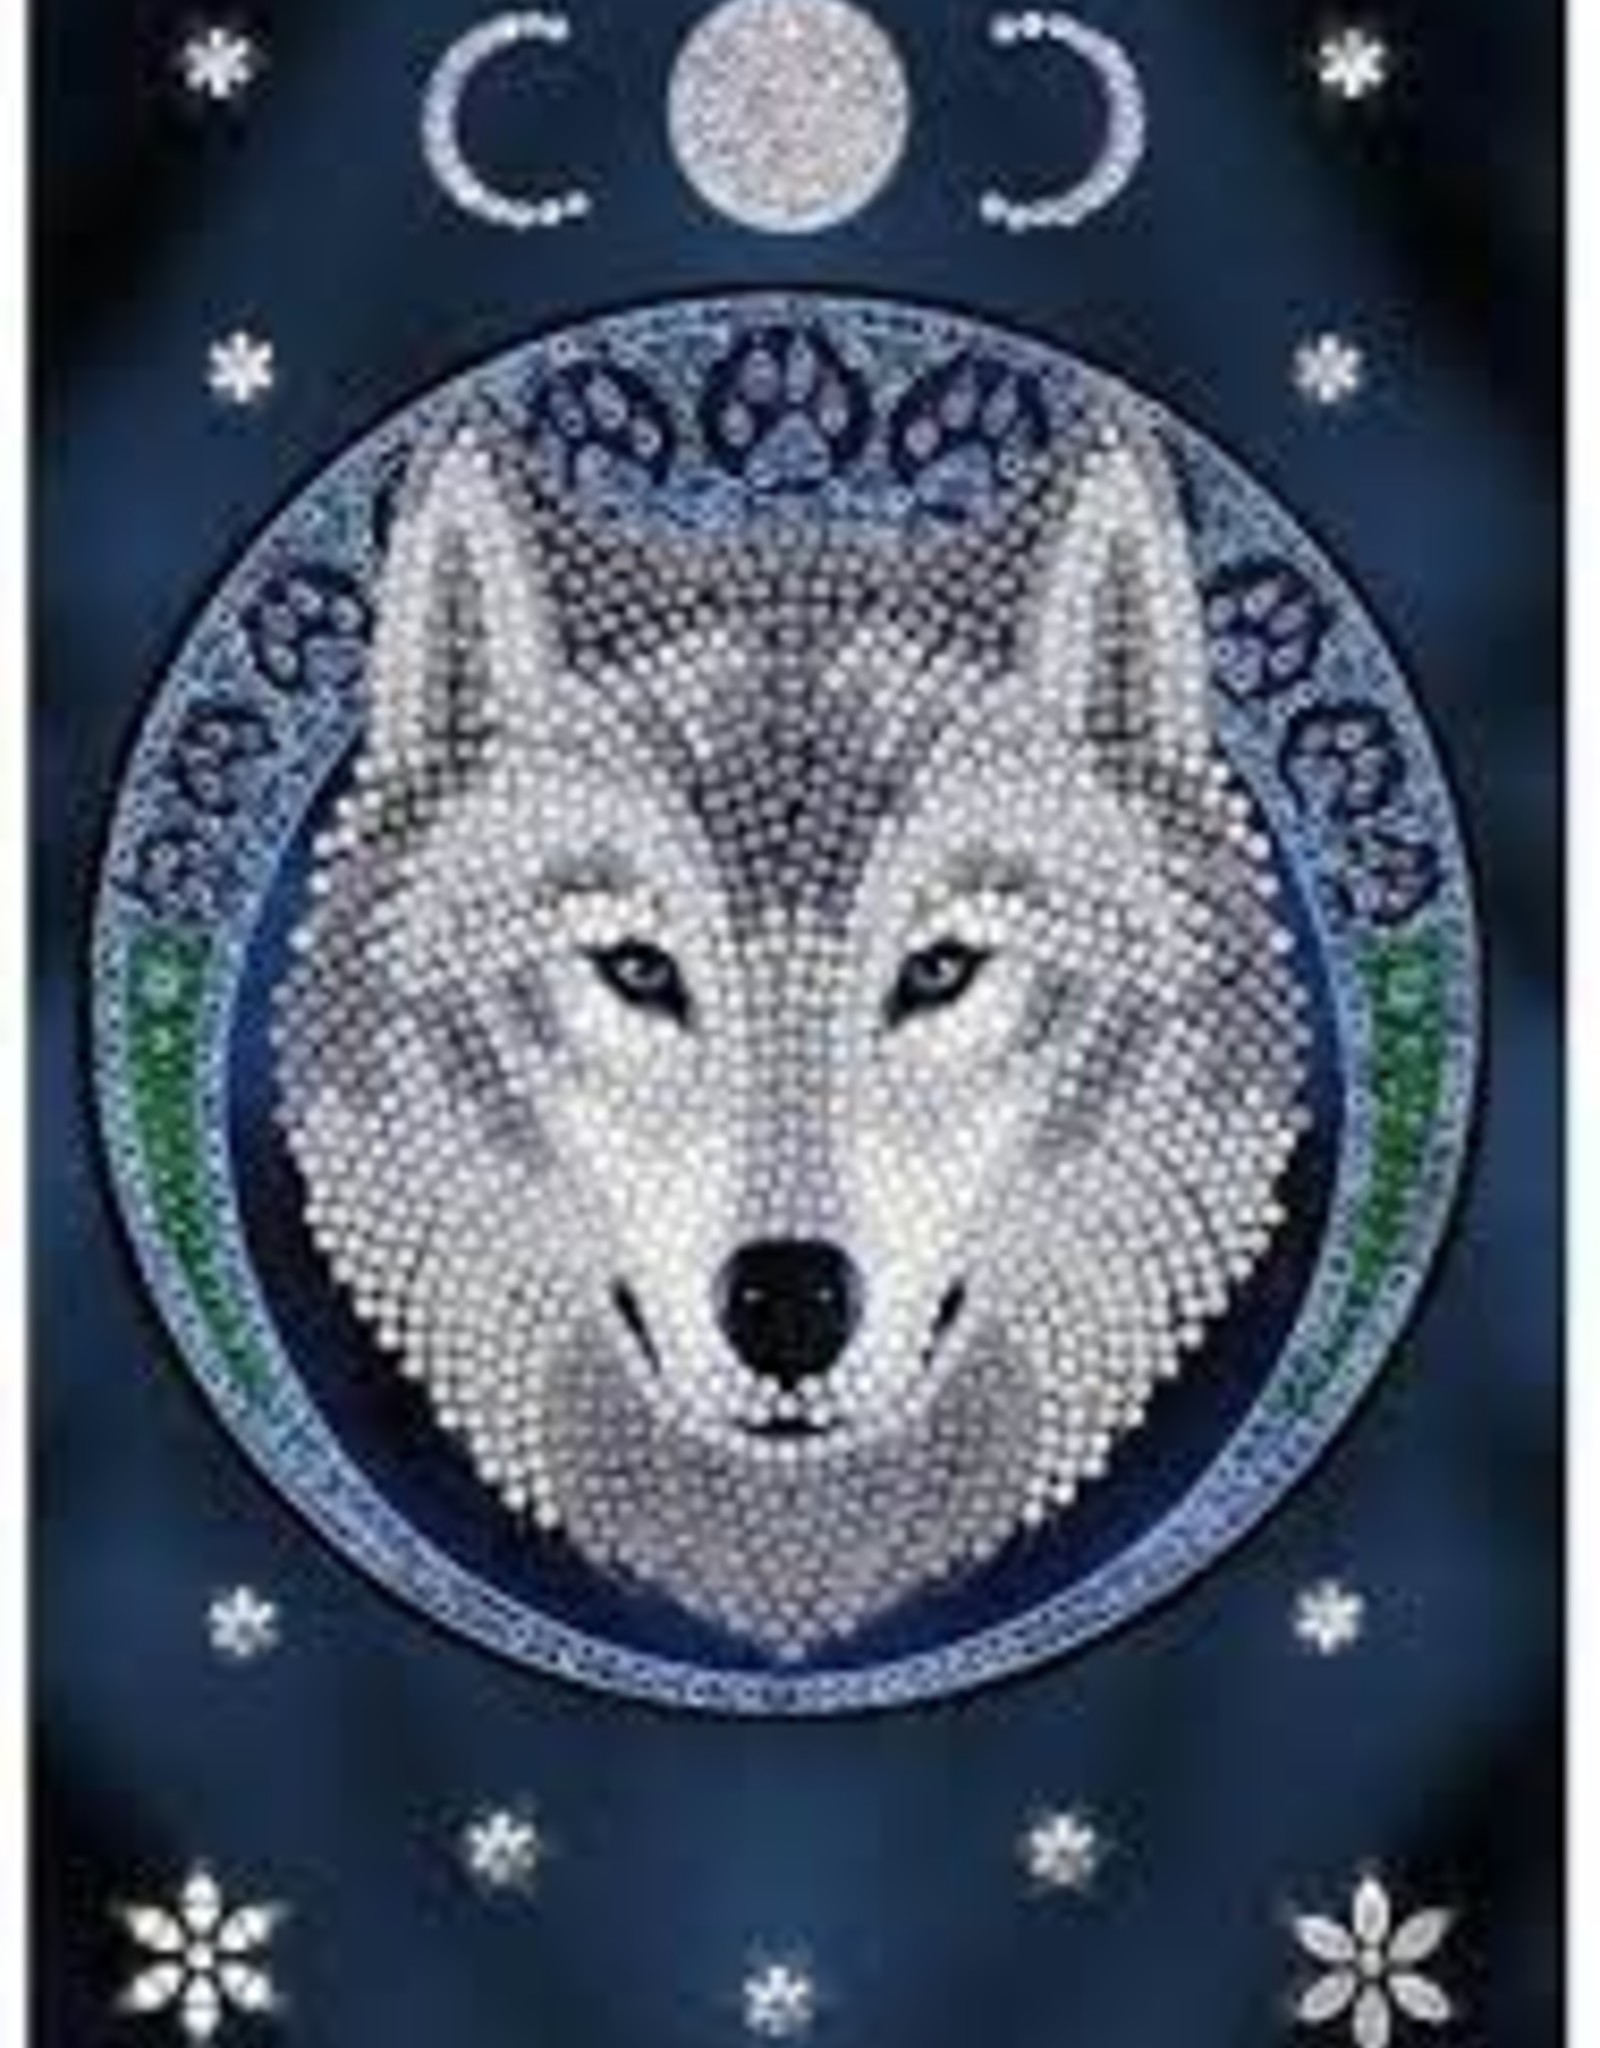 Crystal Art Crystal Art Notebook- Lunar Wolf